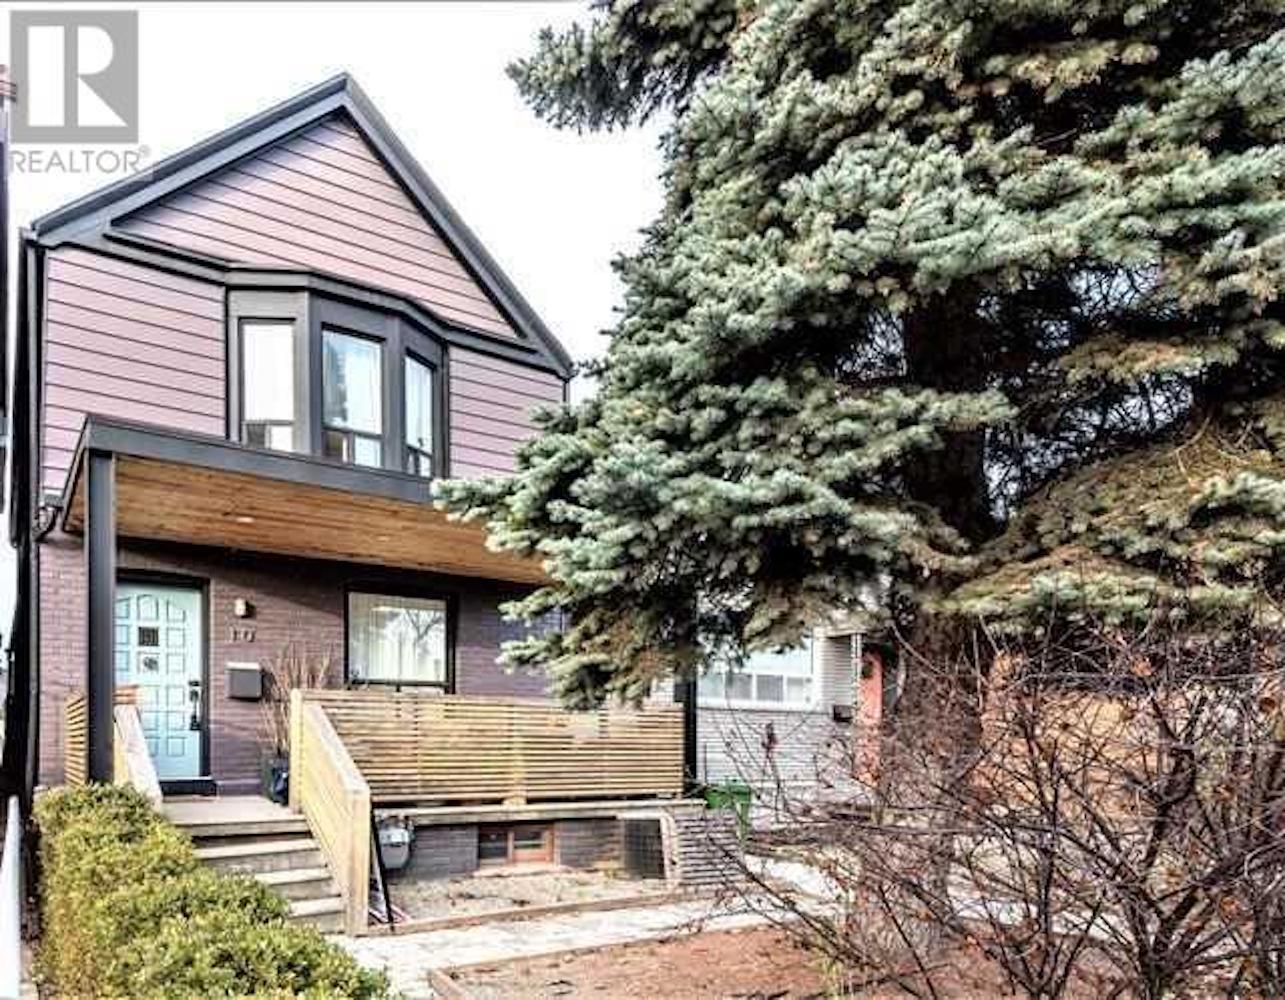 Peek Inside Meghan Markle's Toronto Home listattu hintaan 1,4 miljoonaa dollaria